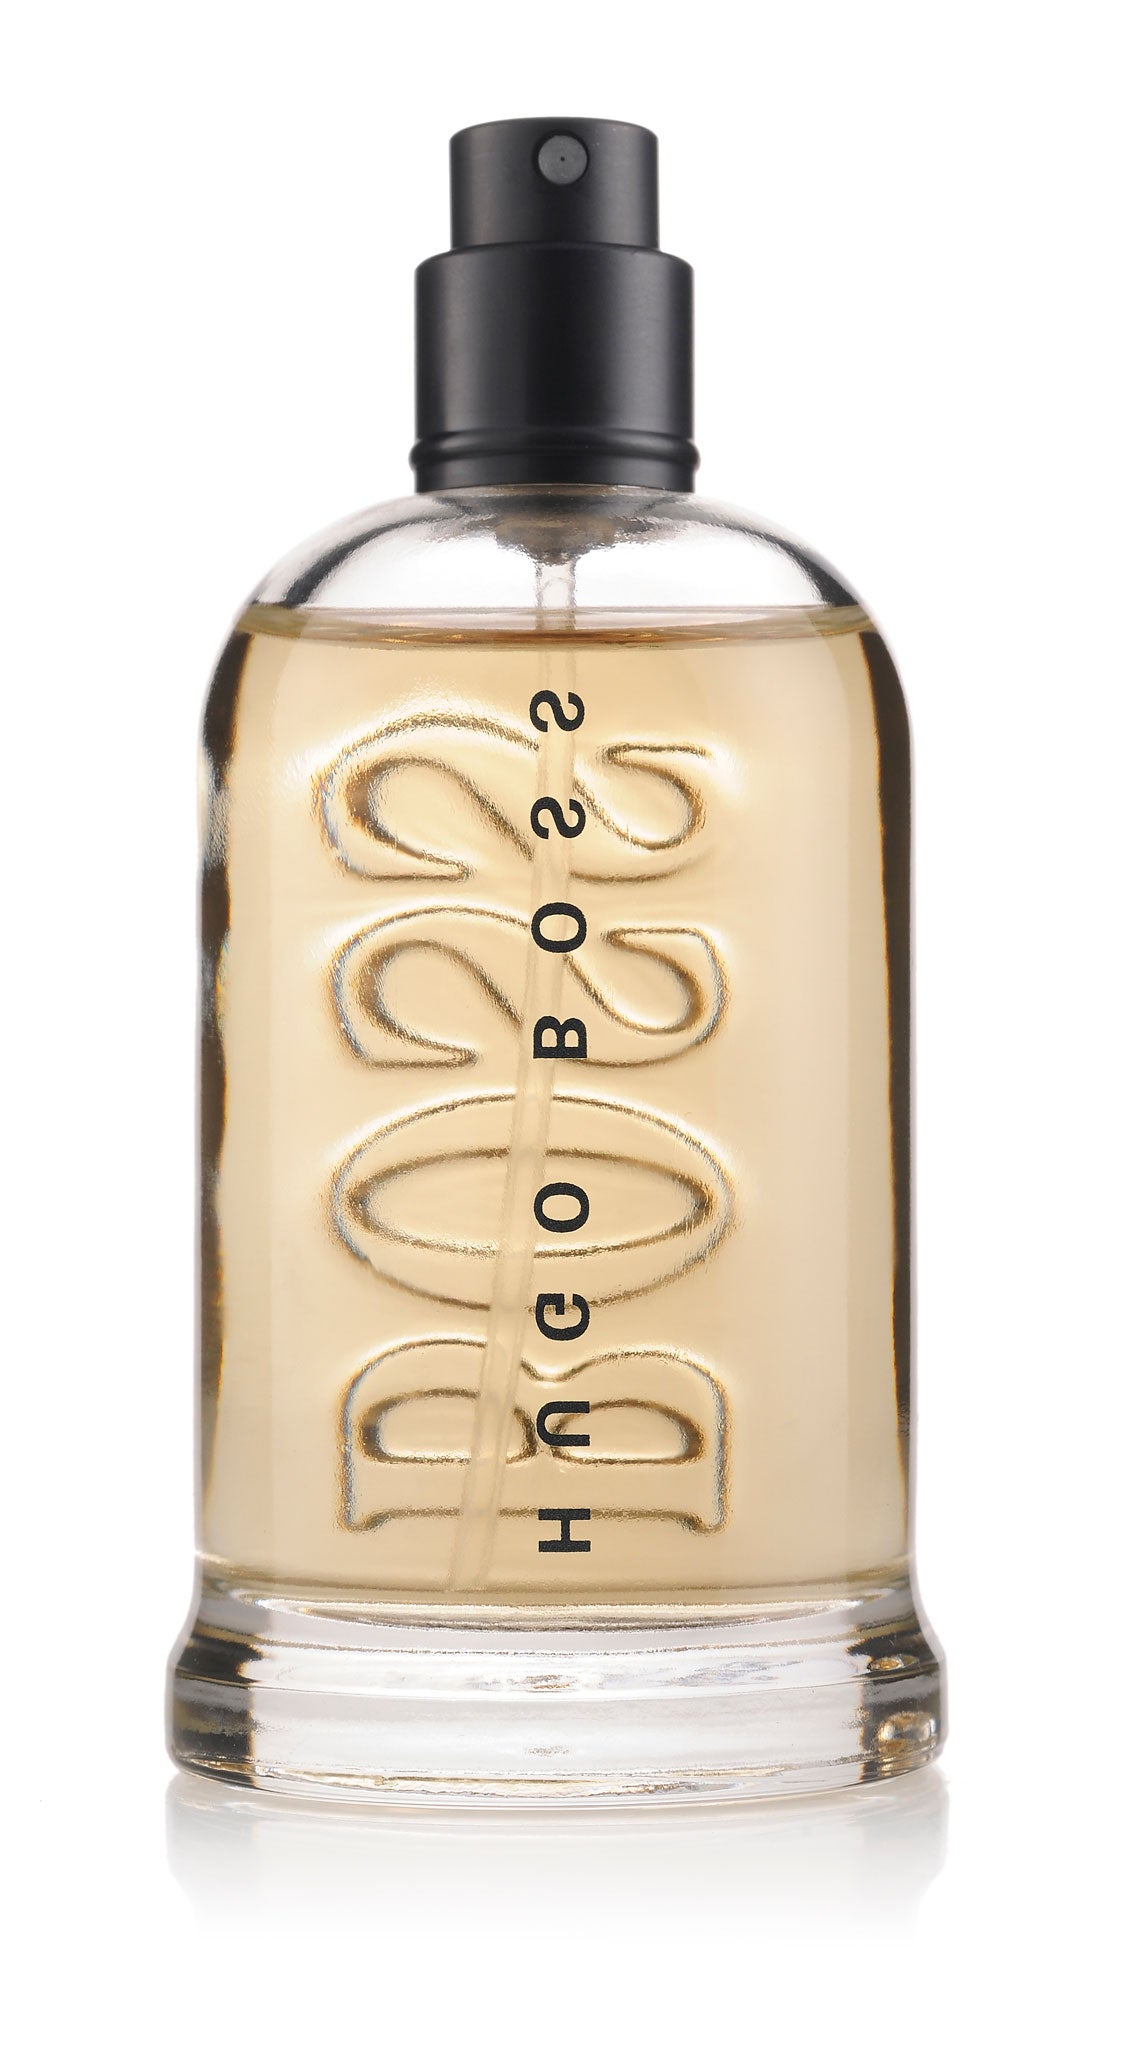 Boss Bottled Intense EDT, about £45 for 50ml, Hugo Boss, available nationwide